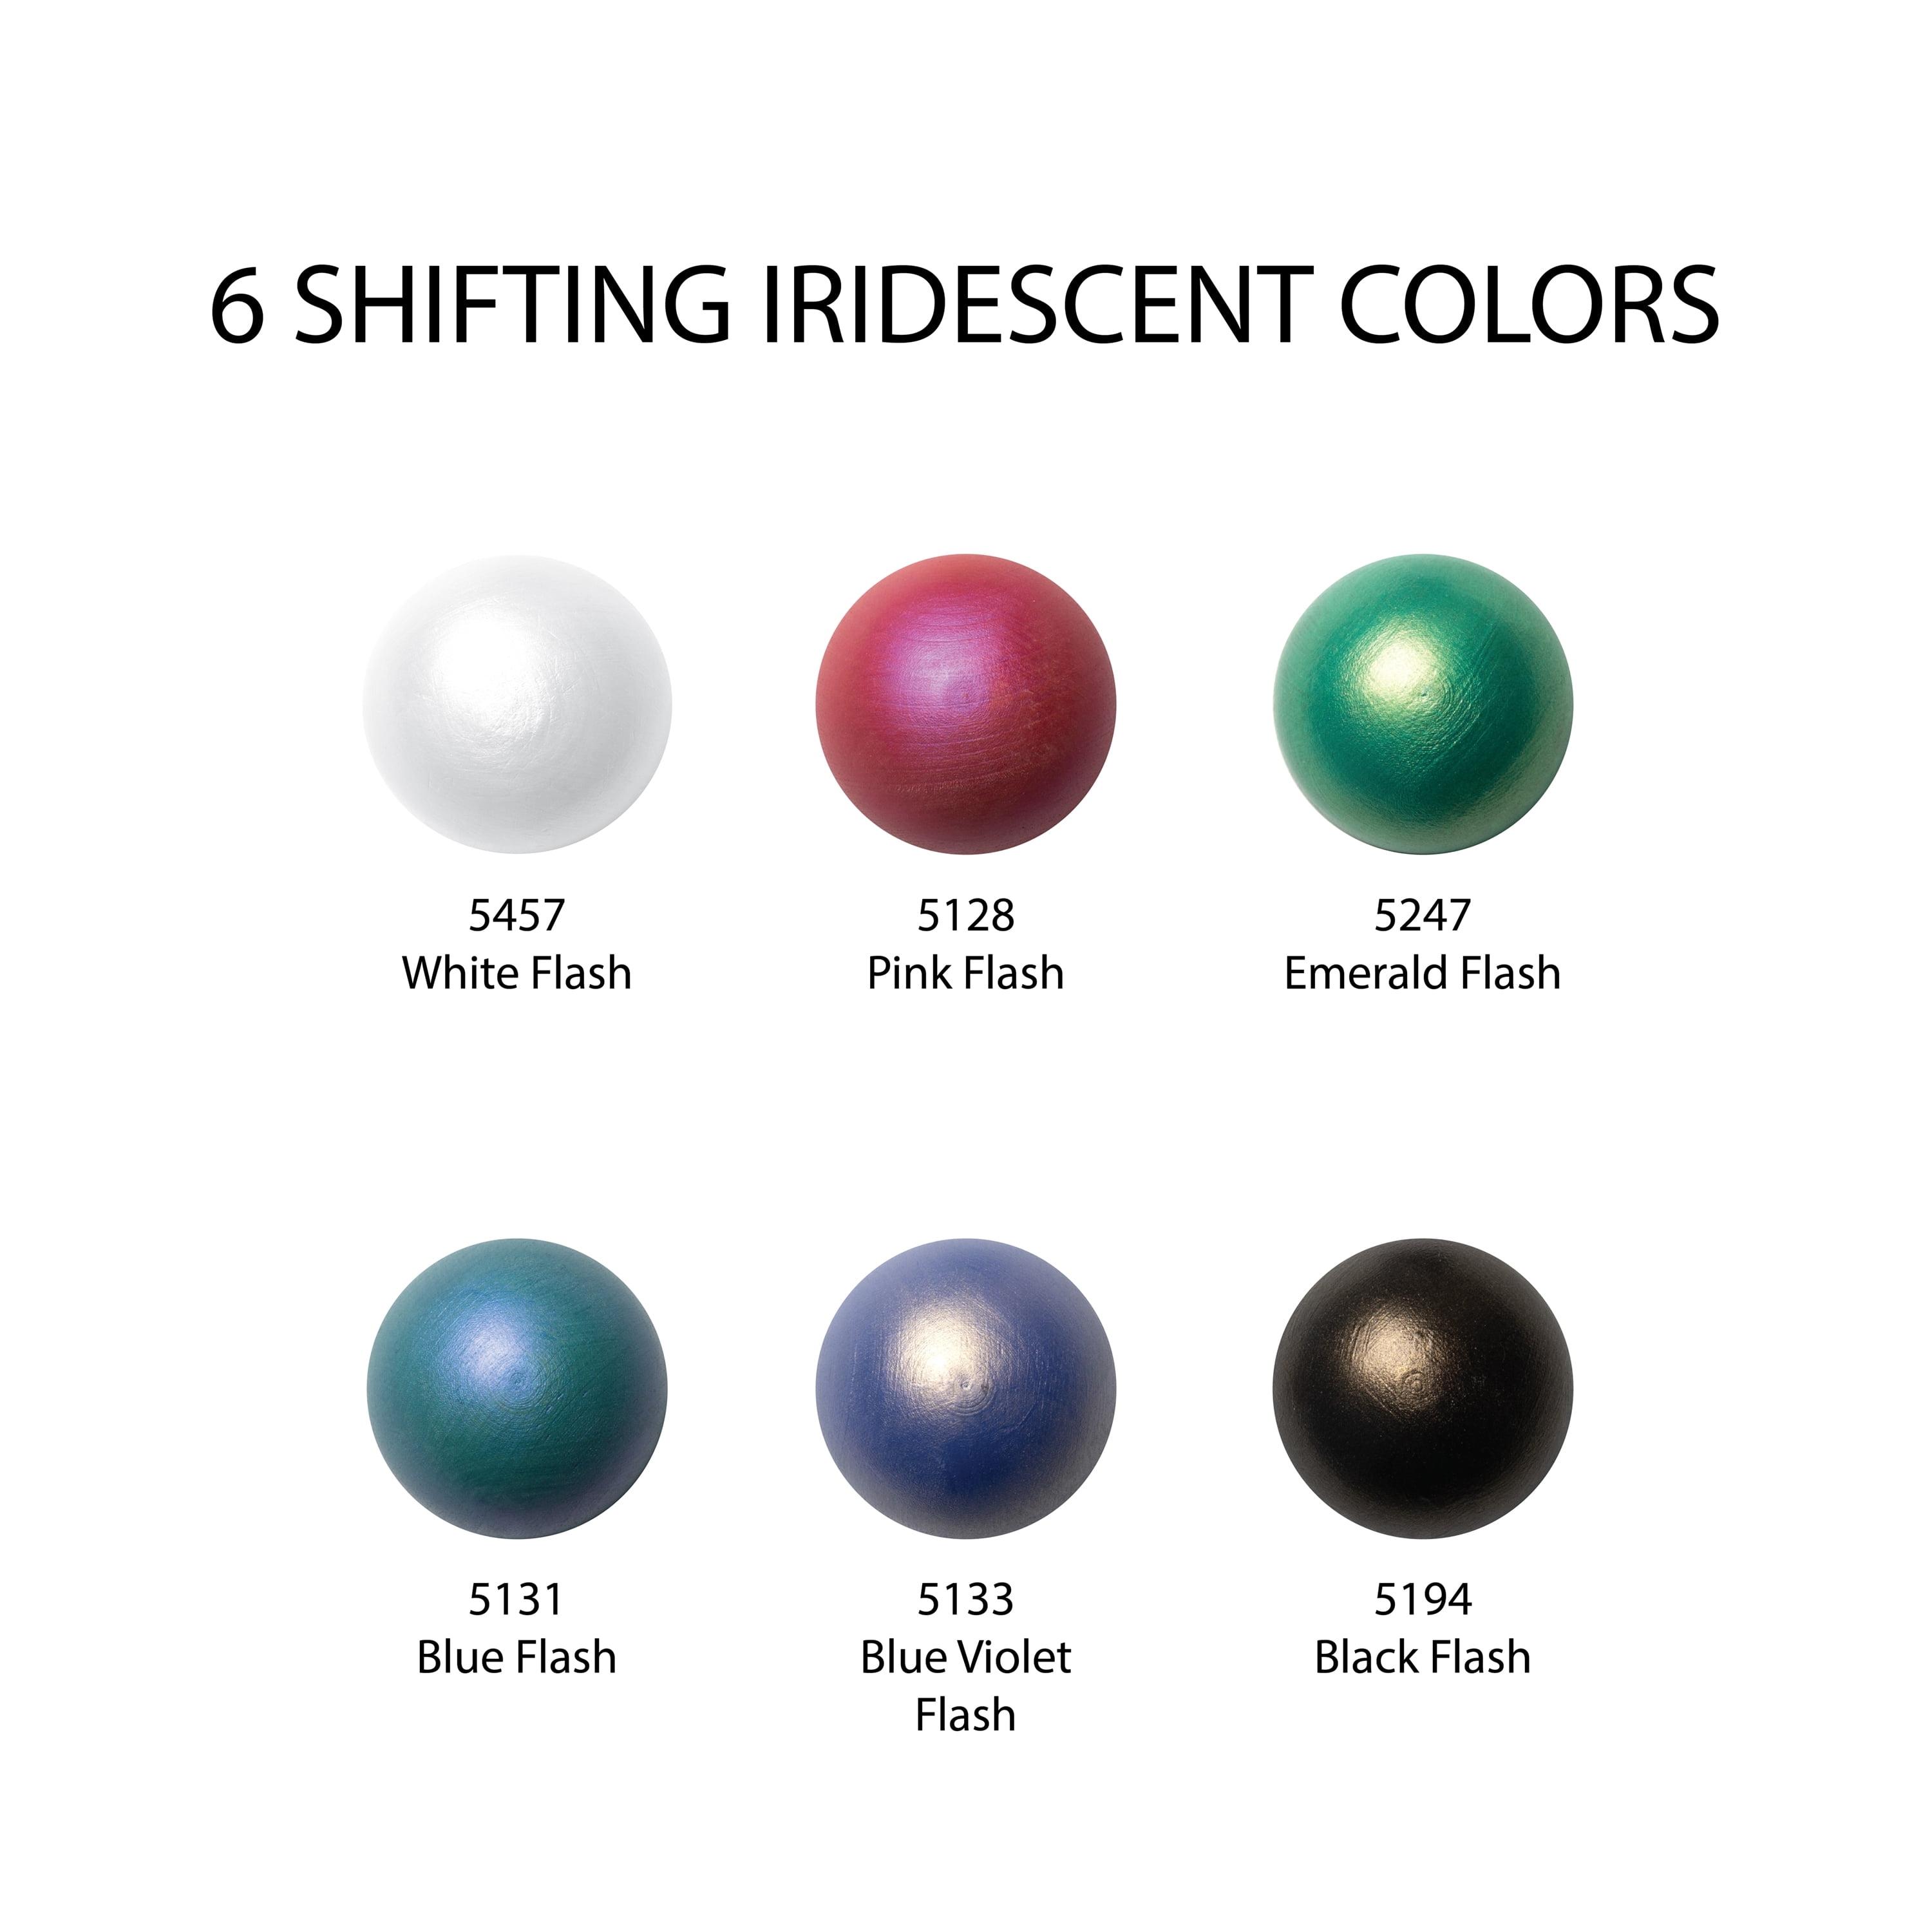 12 Pack: FolkArt® Color Shift™ Gloss Finish Metallic Acrylic Paint